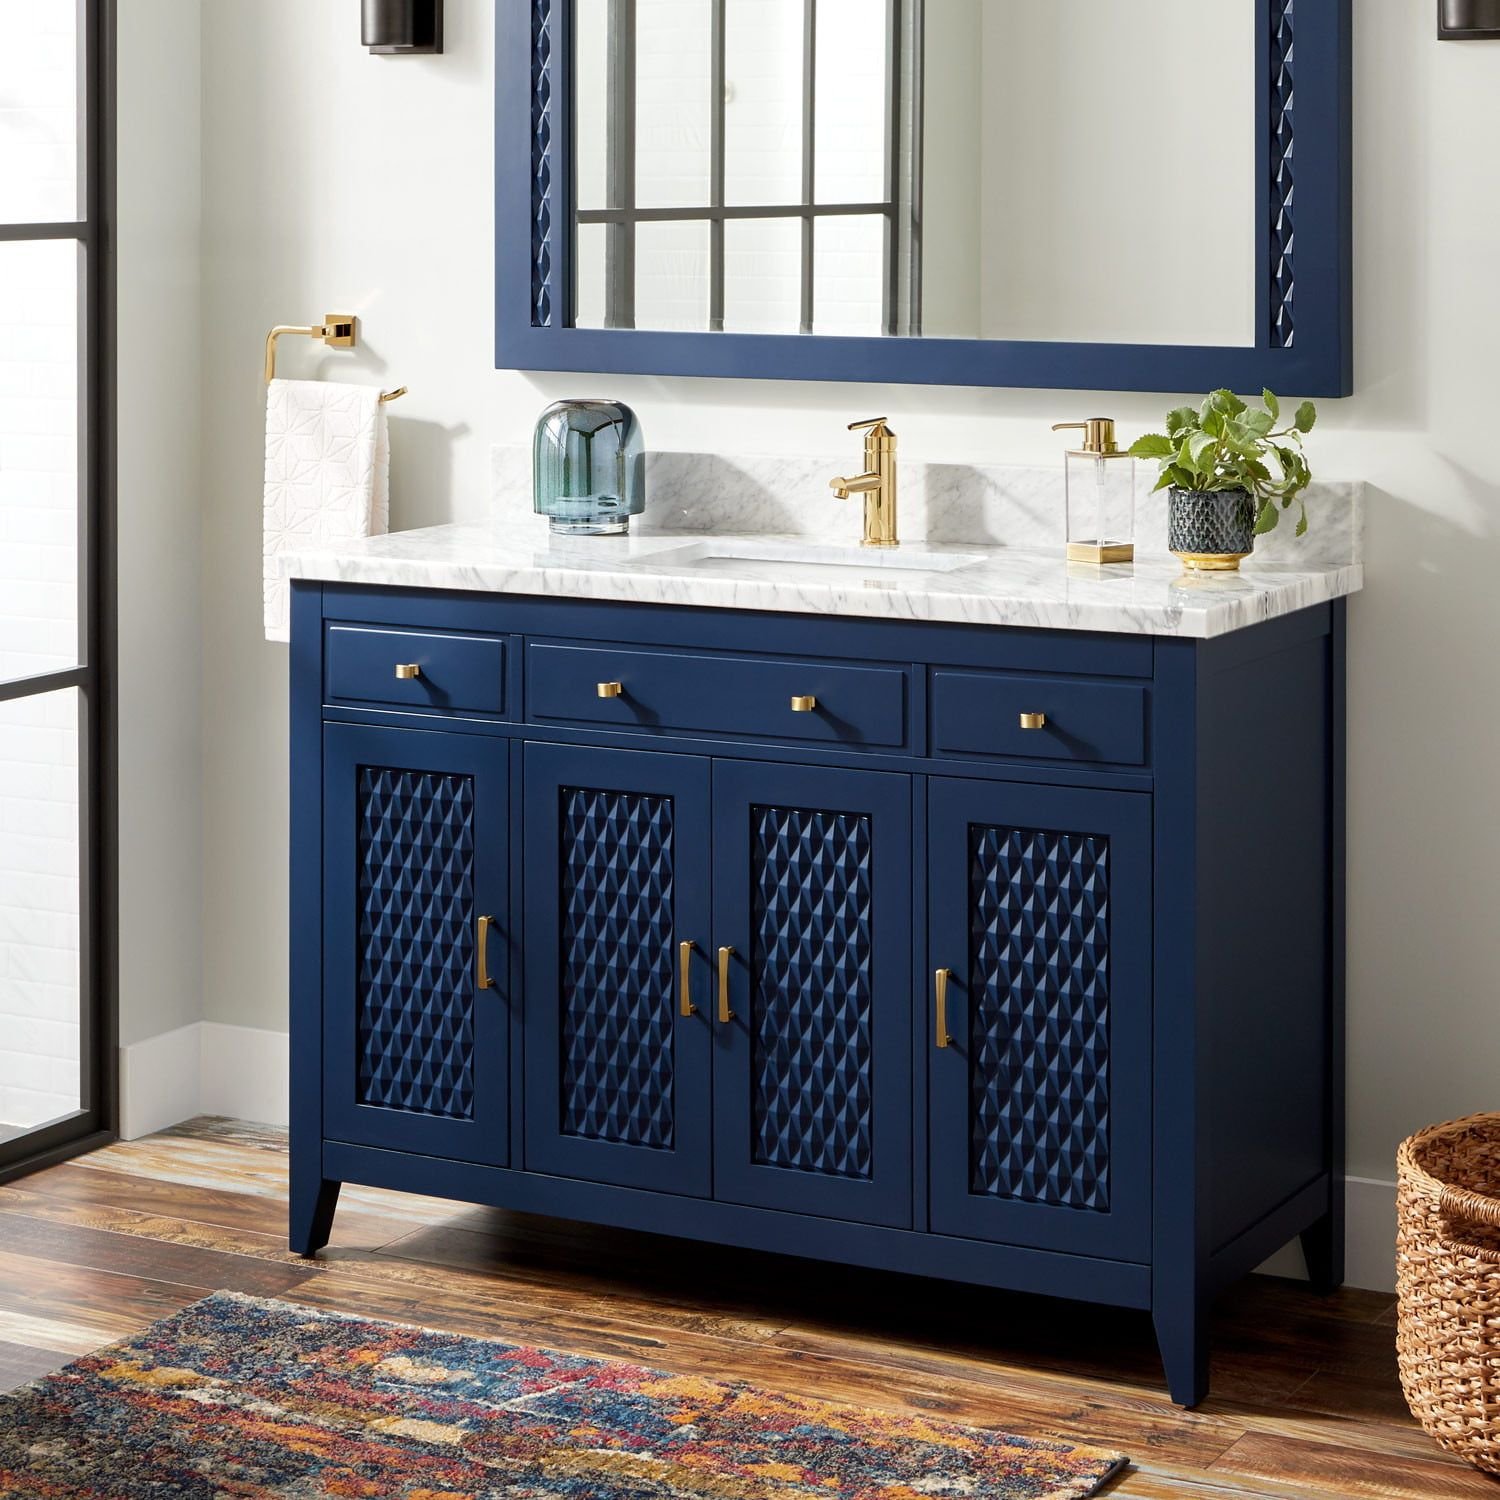 Мебель для ванной напольная. Navy Blue Bathroom Vanity 48 inch Double Sink. Каприго мебель для ванной. Мебель для ванной синего цвета. Тумба в ванную комнату.